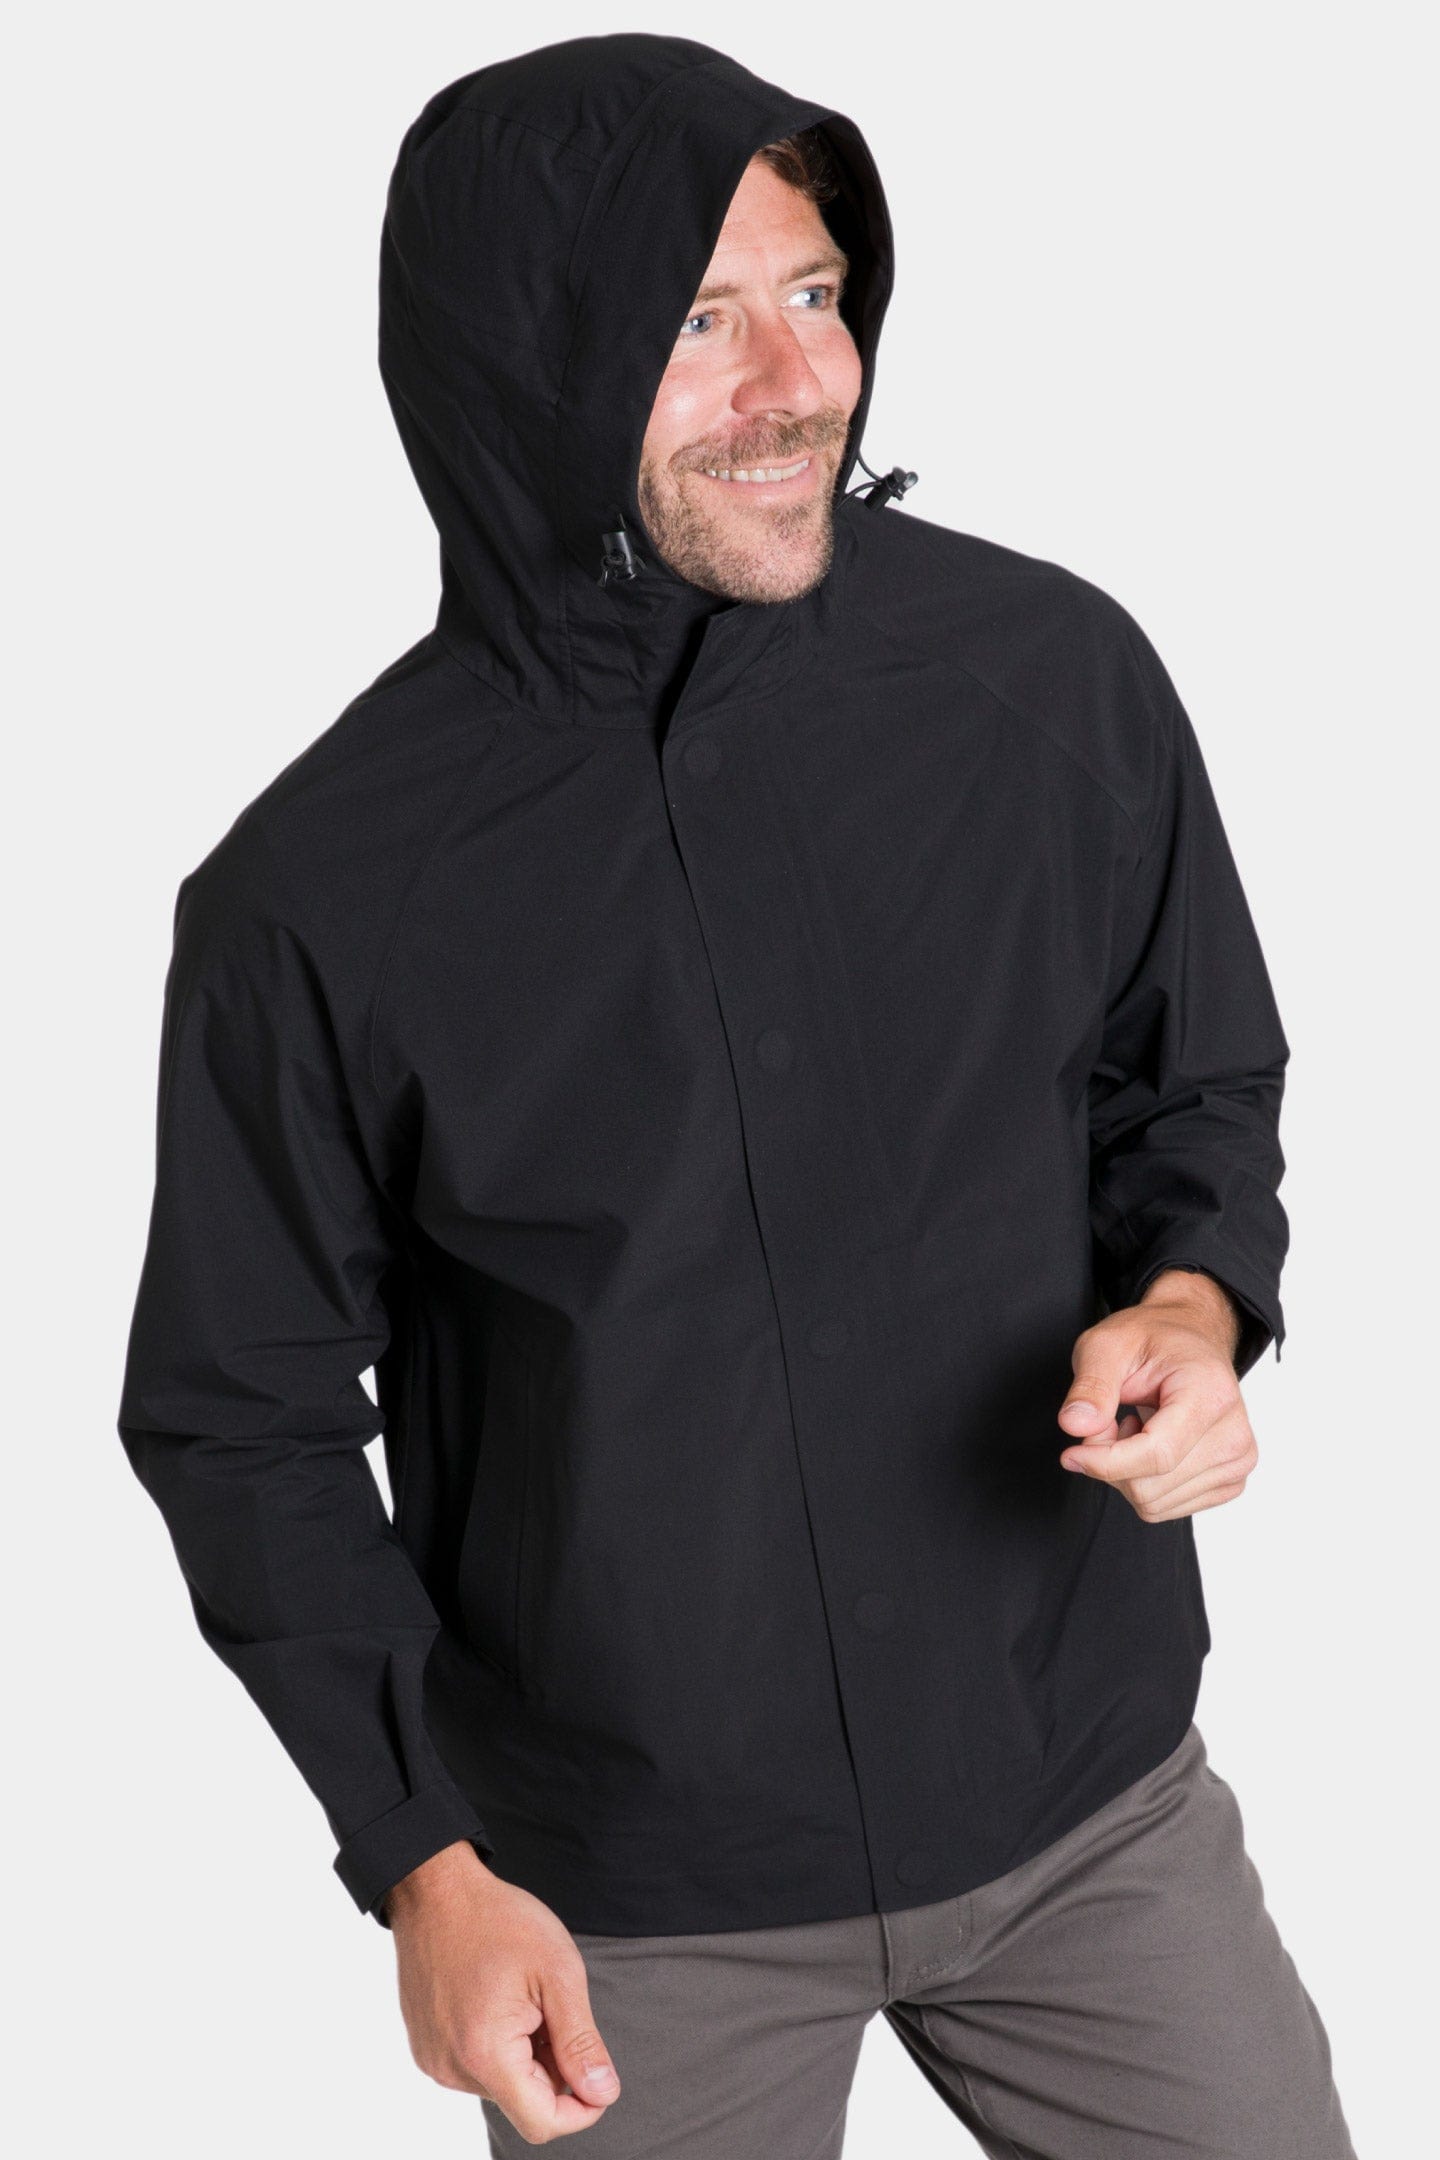 Ash & Erie Black Rain Jacket for Short Men   Rain Jacket